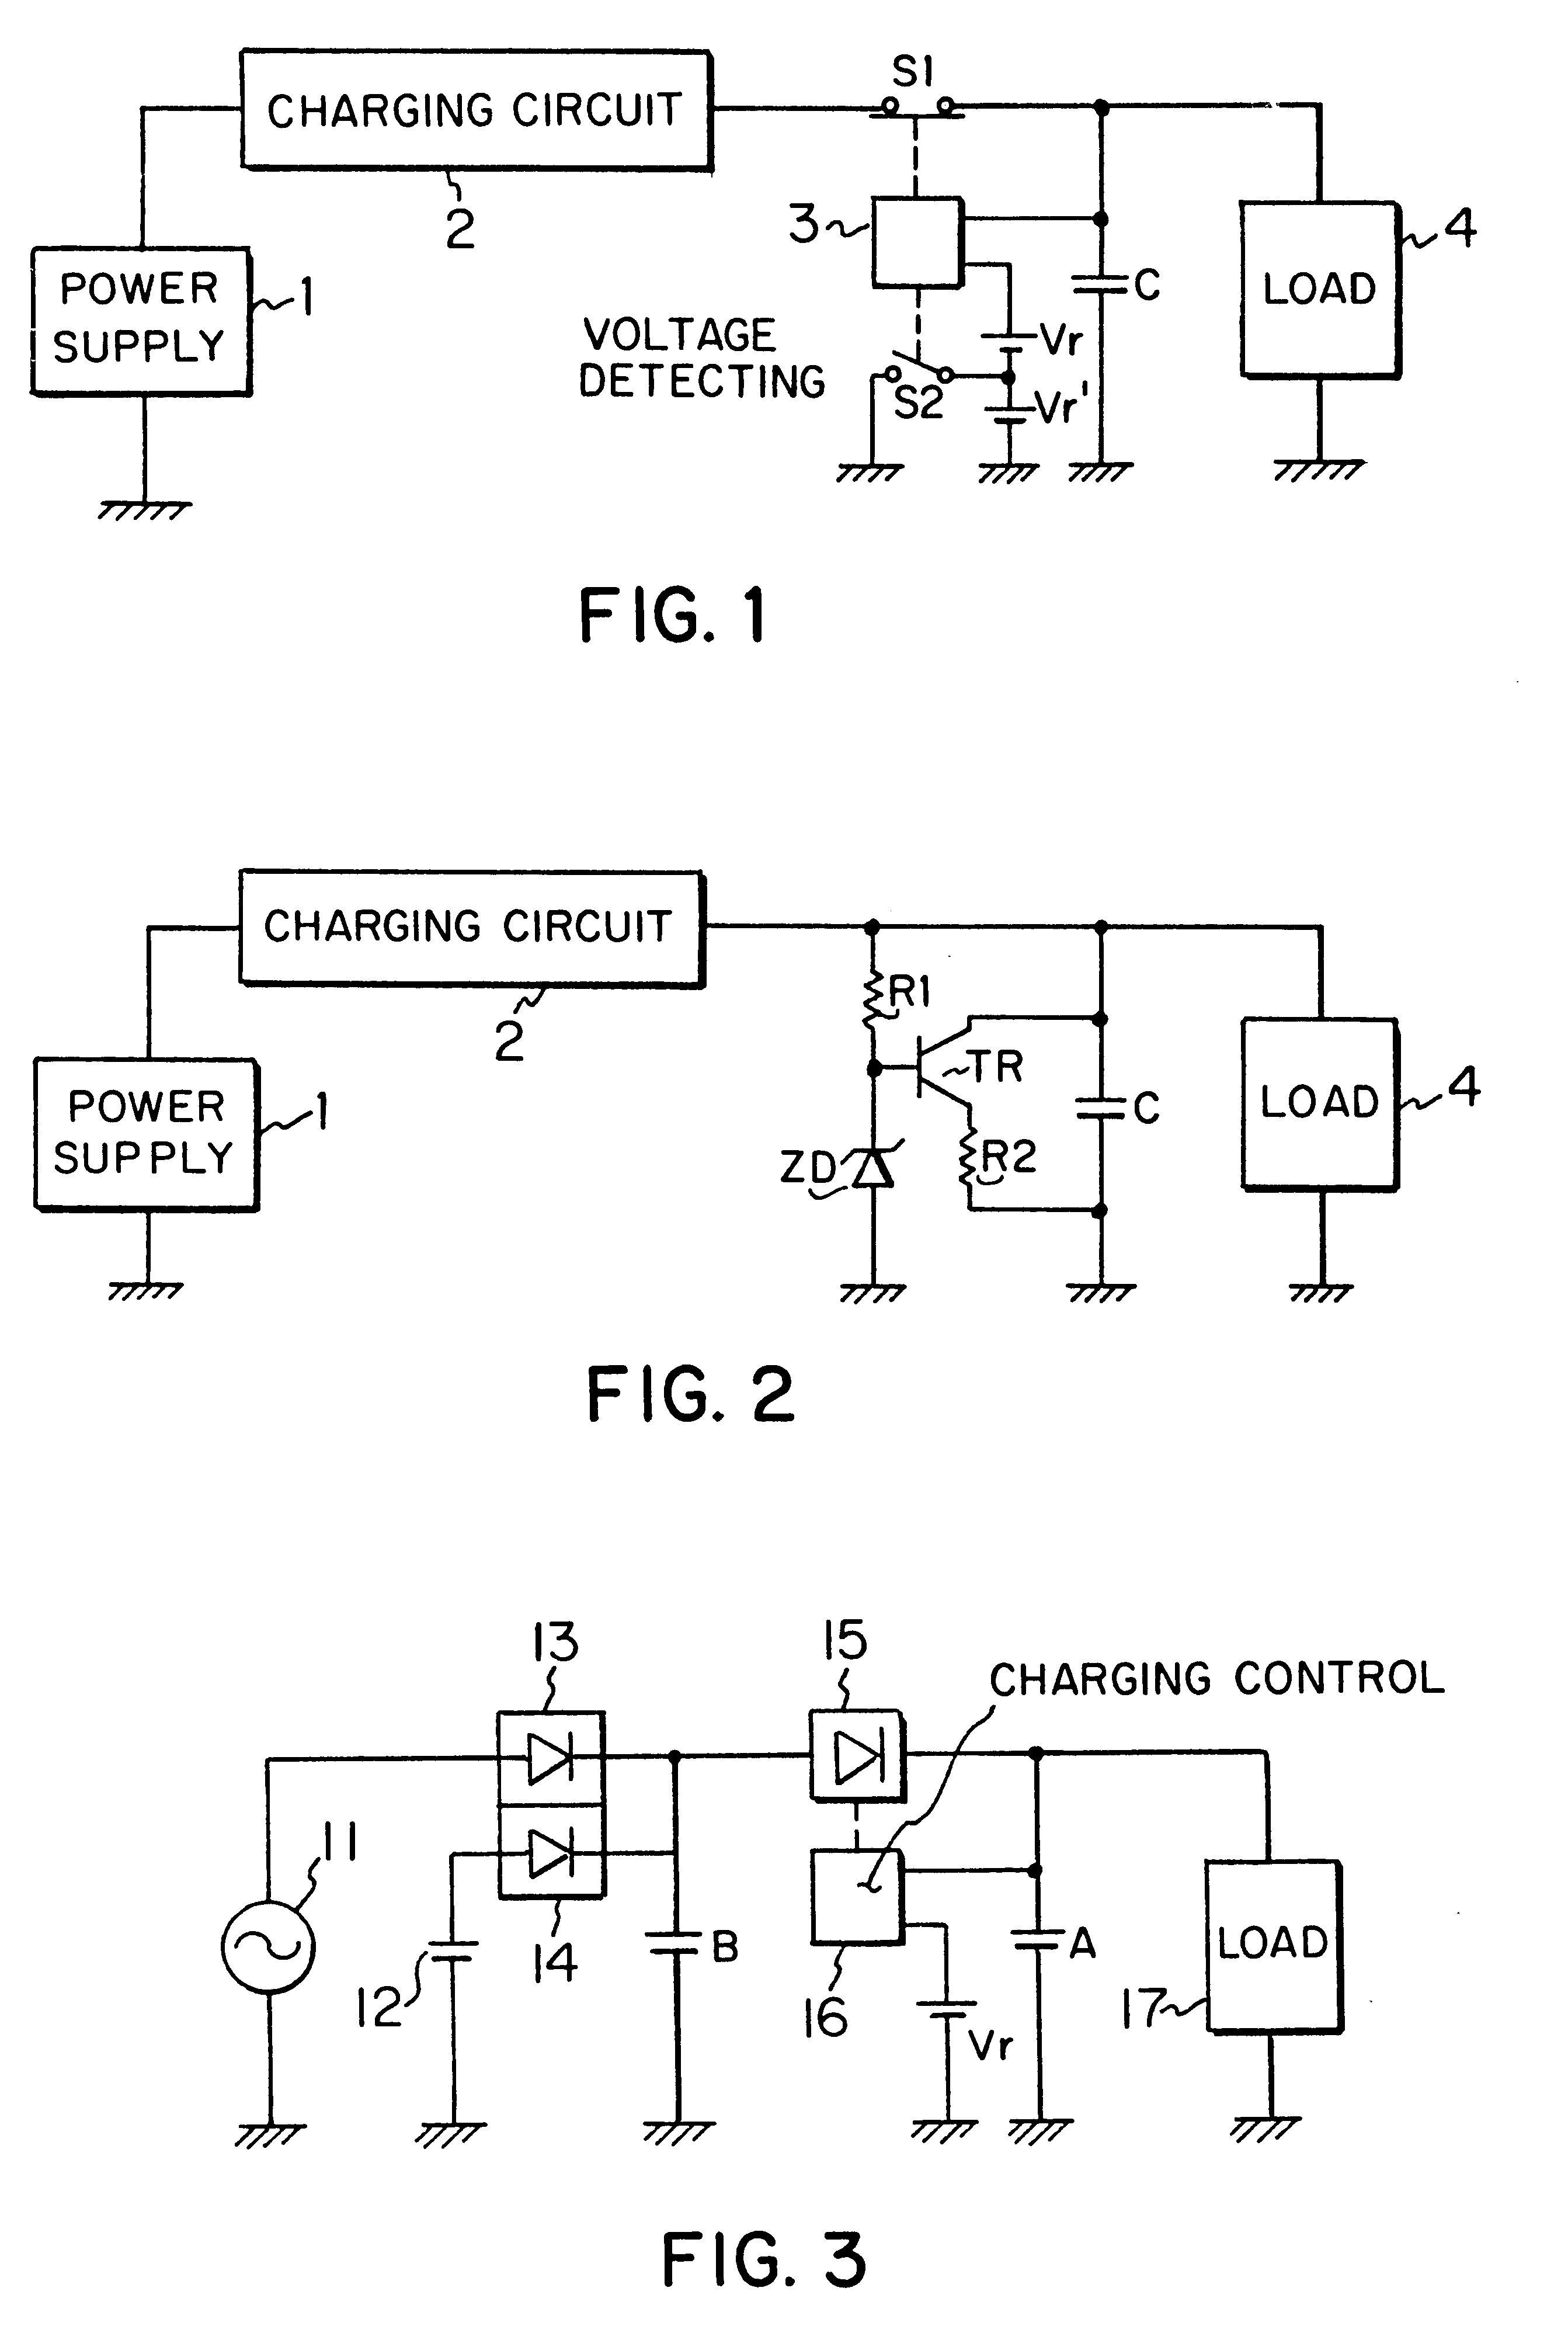 Storage capacitor power supply